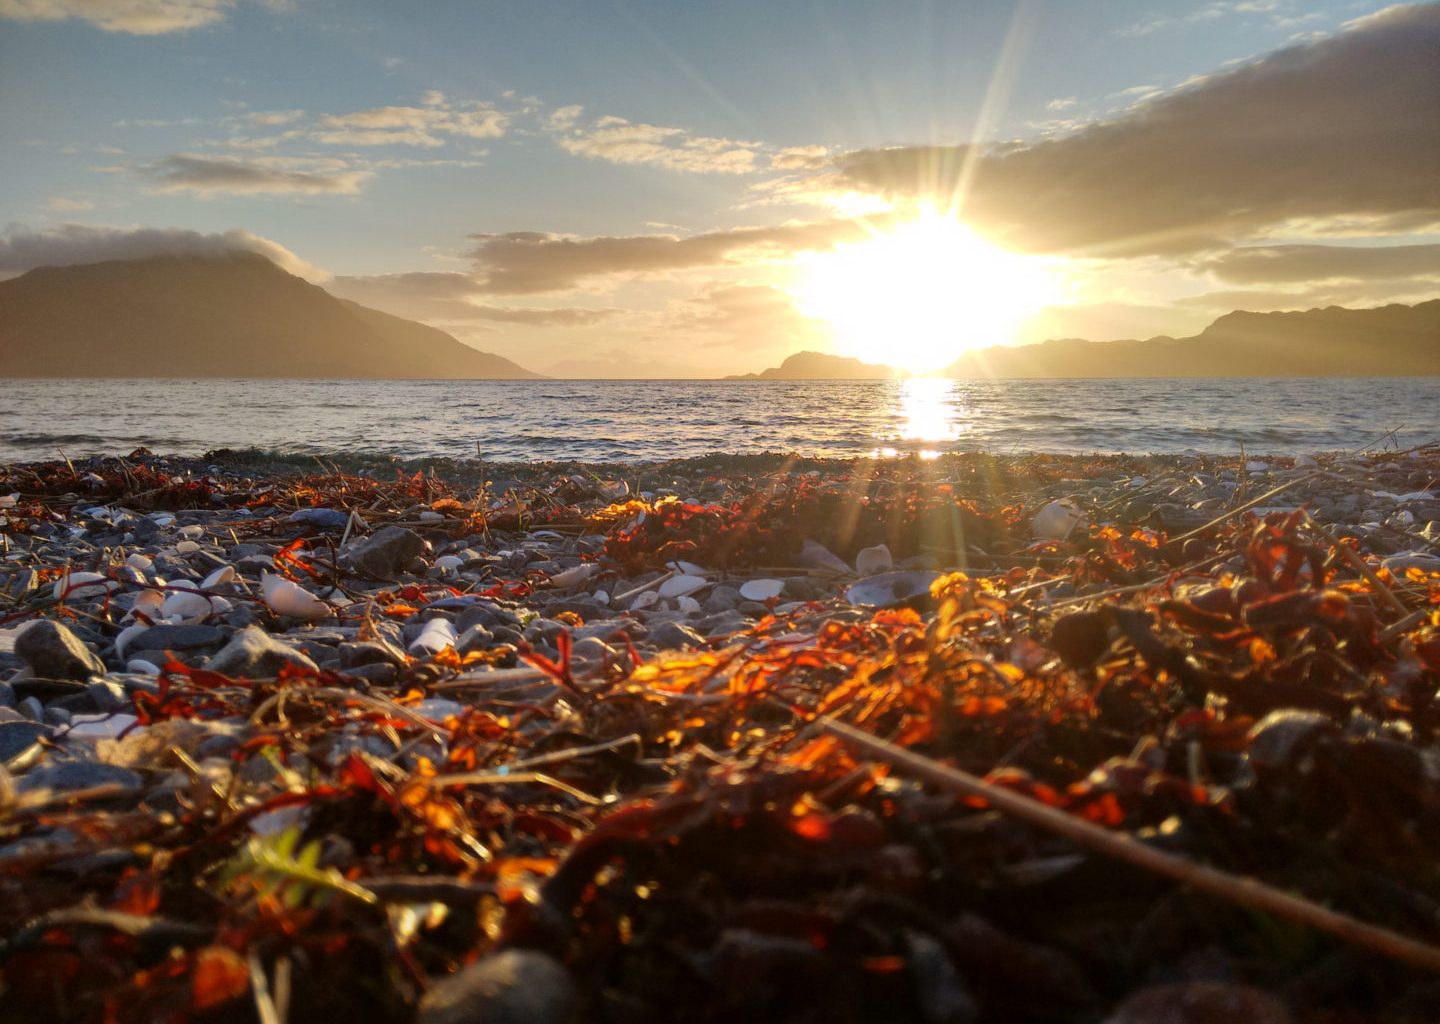 Warning that kelp dredging trials could trigger ‘environmental destruction’ 3